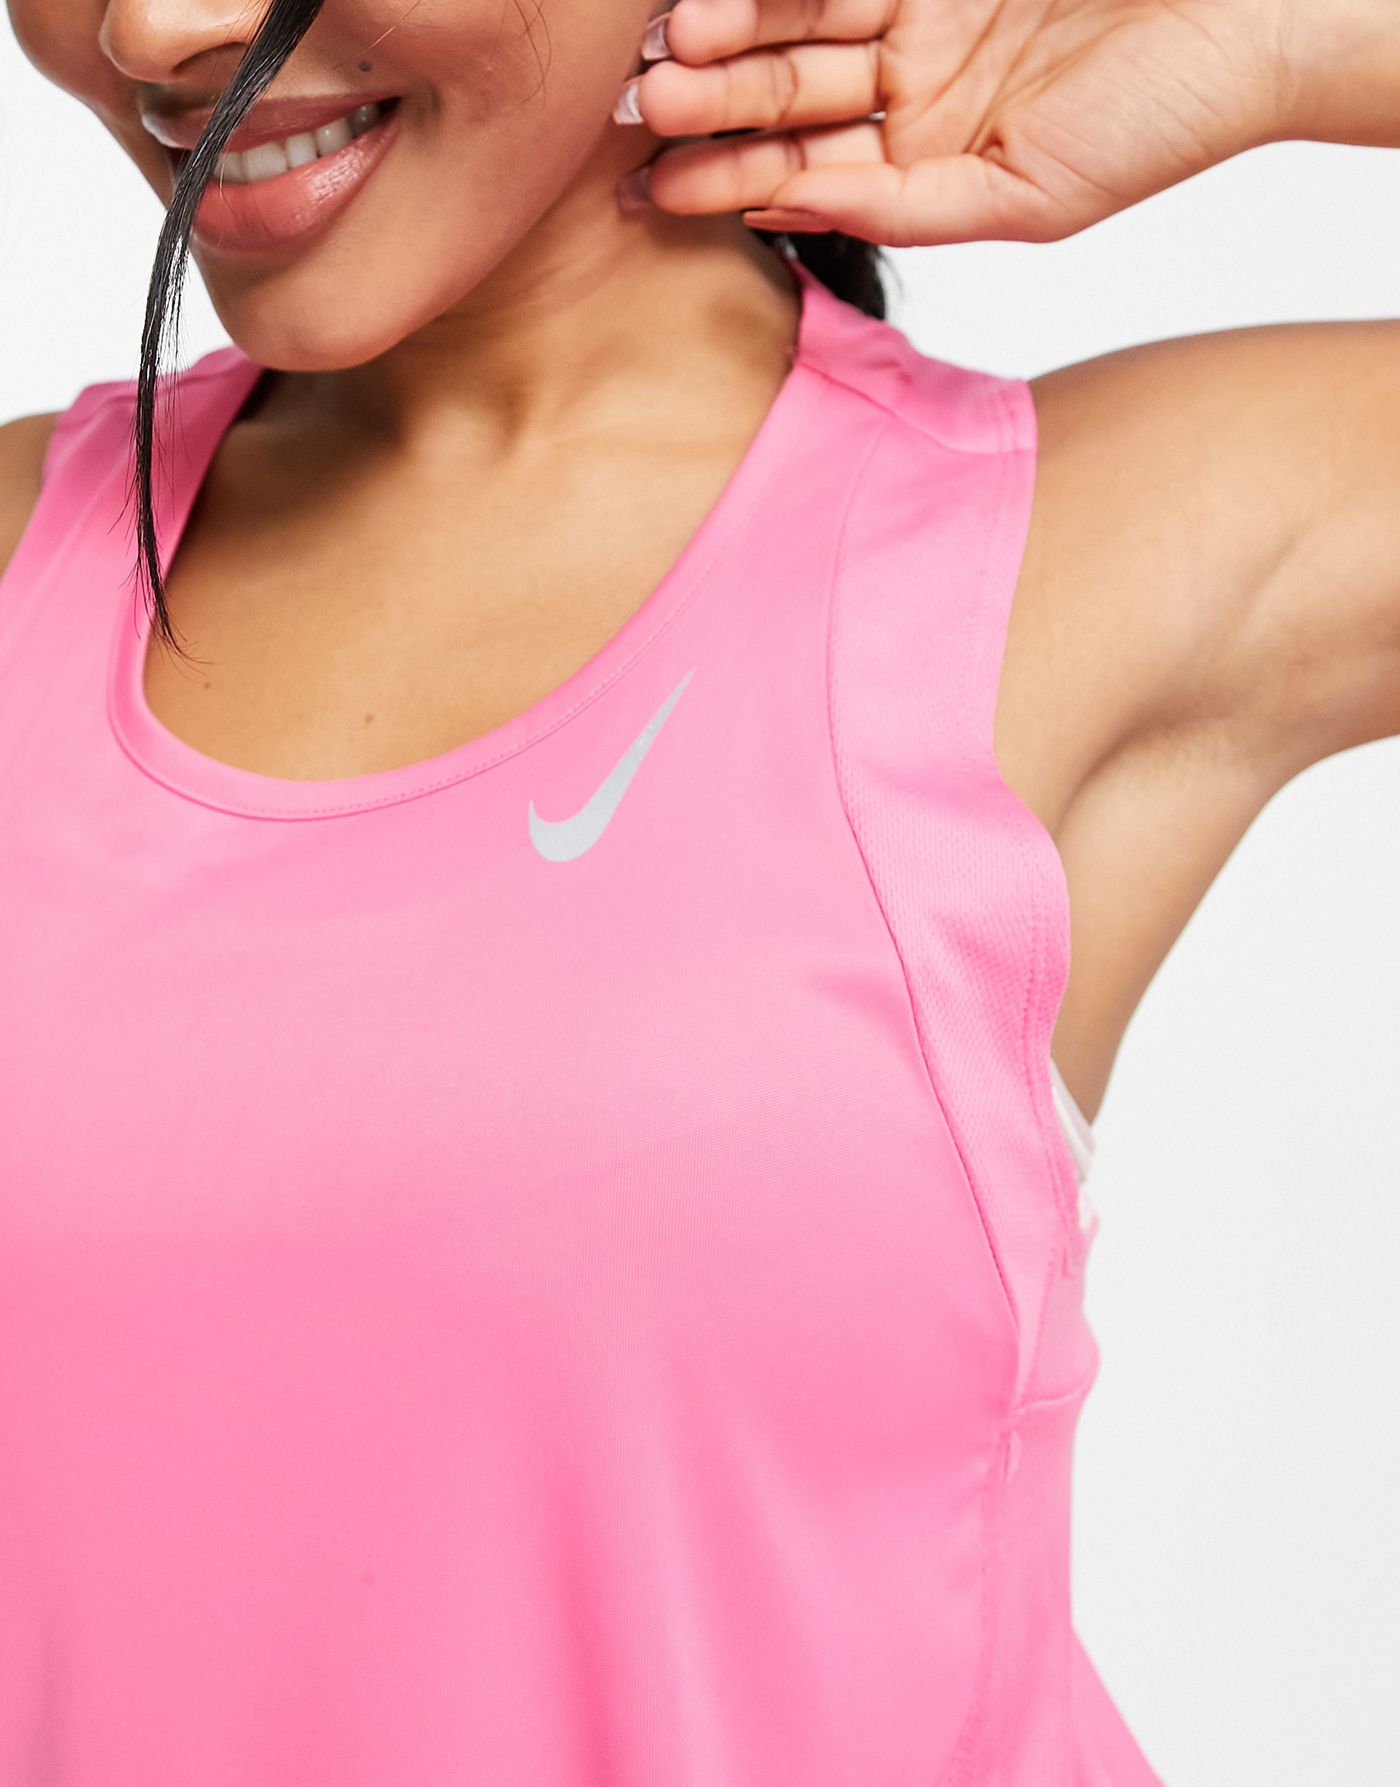 Nike Running Race Day Dri-FIT singlet vest in pink